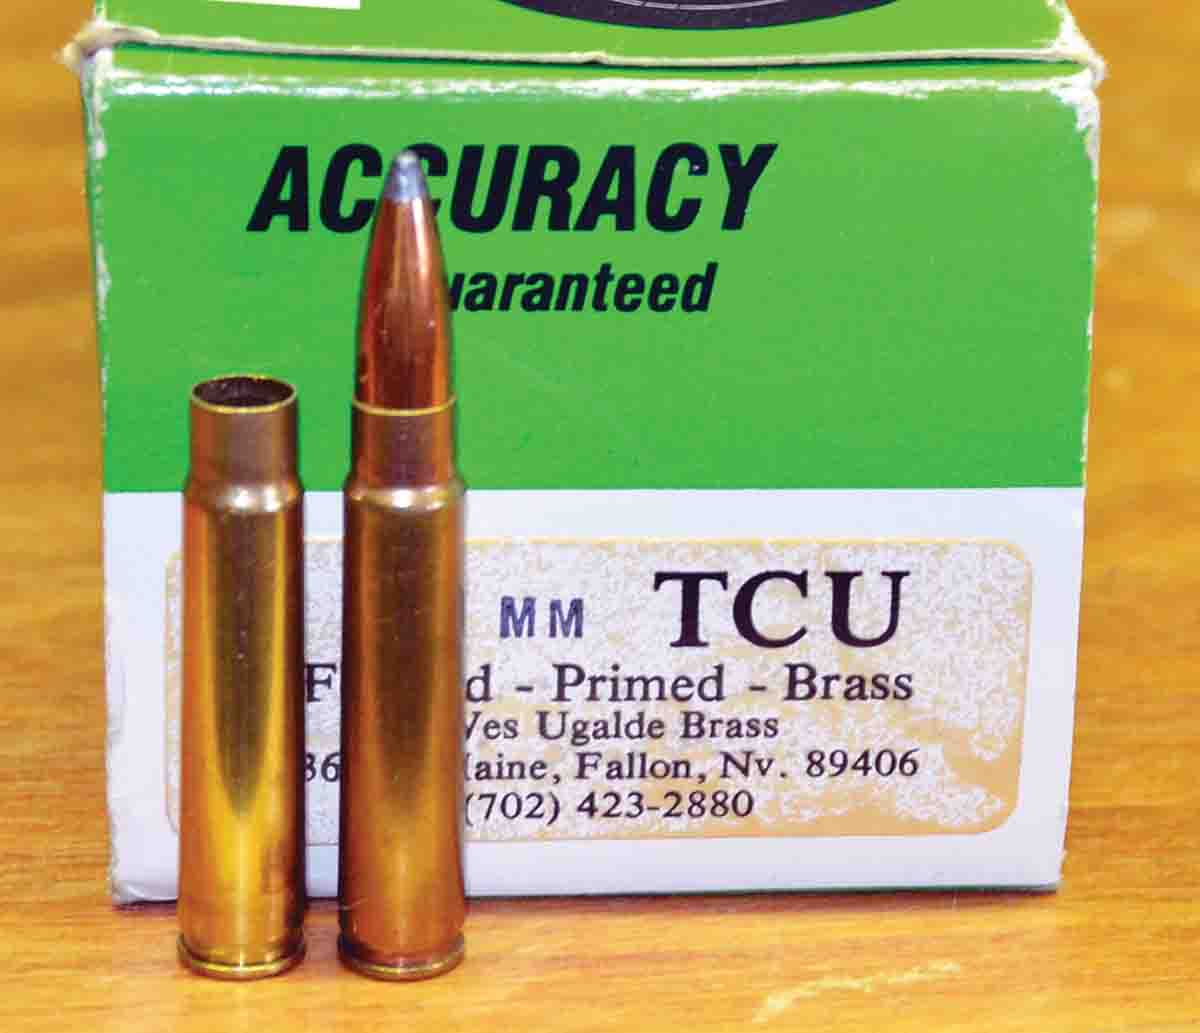 Wes Ugalde, developer of the 7mm TCU cartridge, offered formed and primed cases.